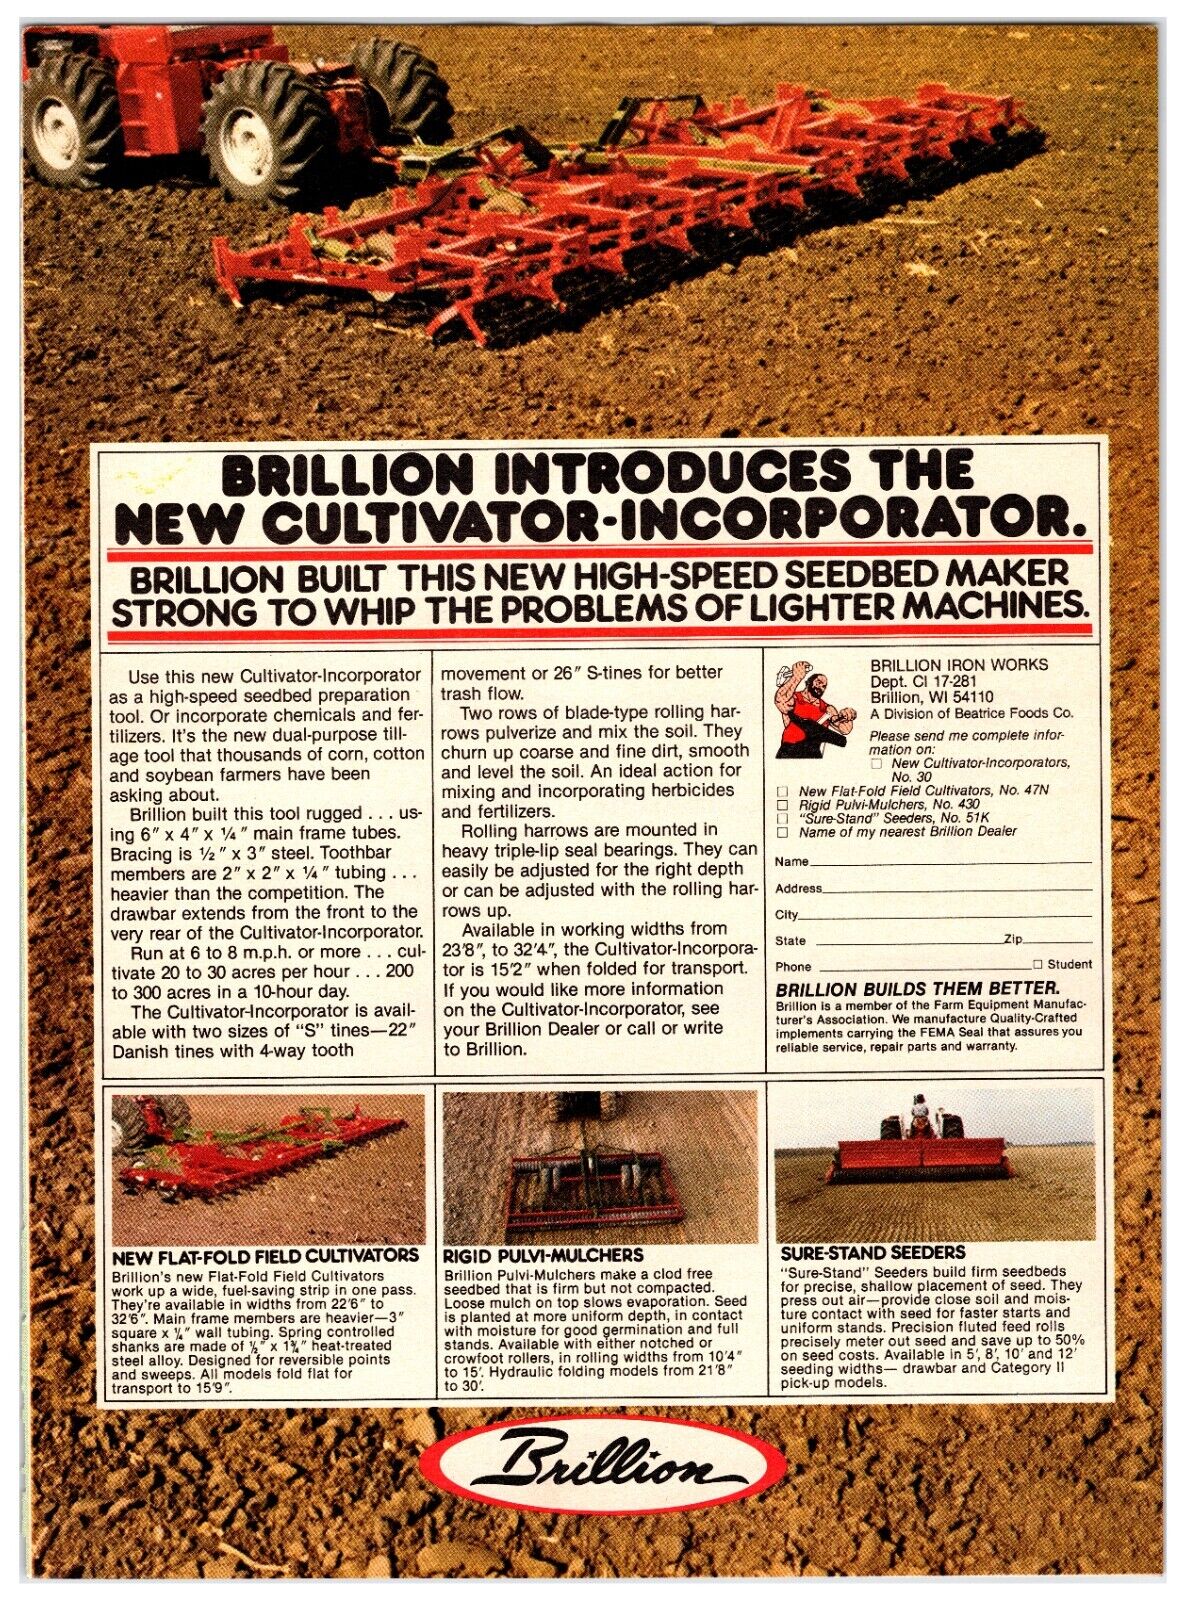 1980s Brillion Cultivator & Equipment Original Print Advertisement (11in x 8in)